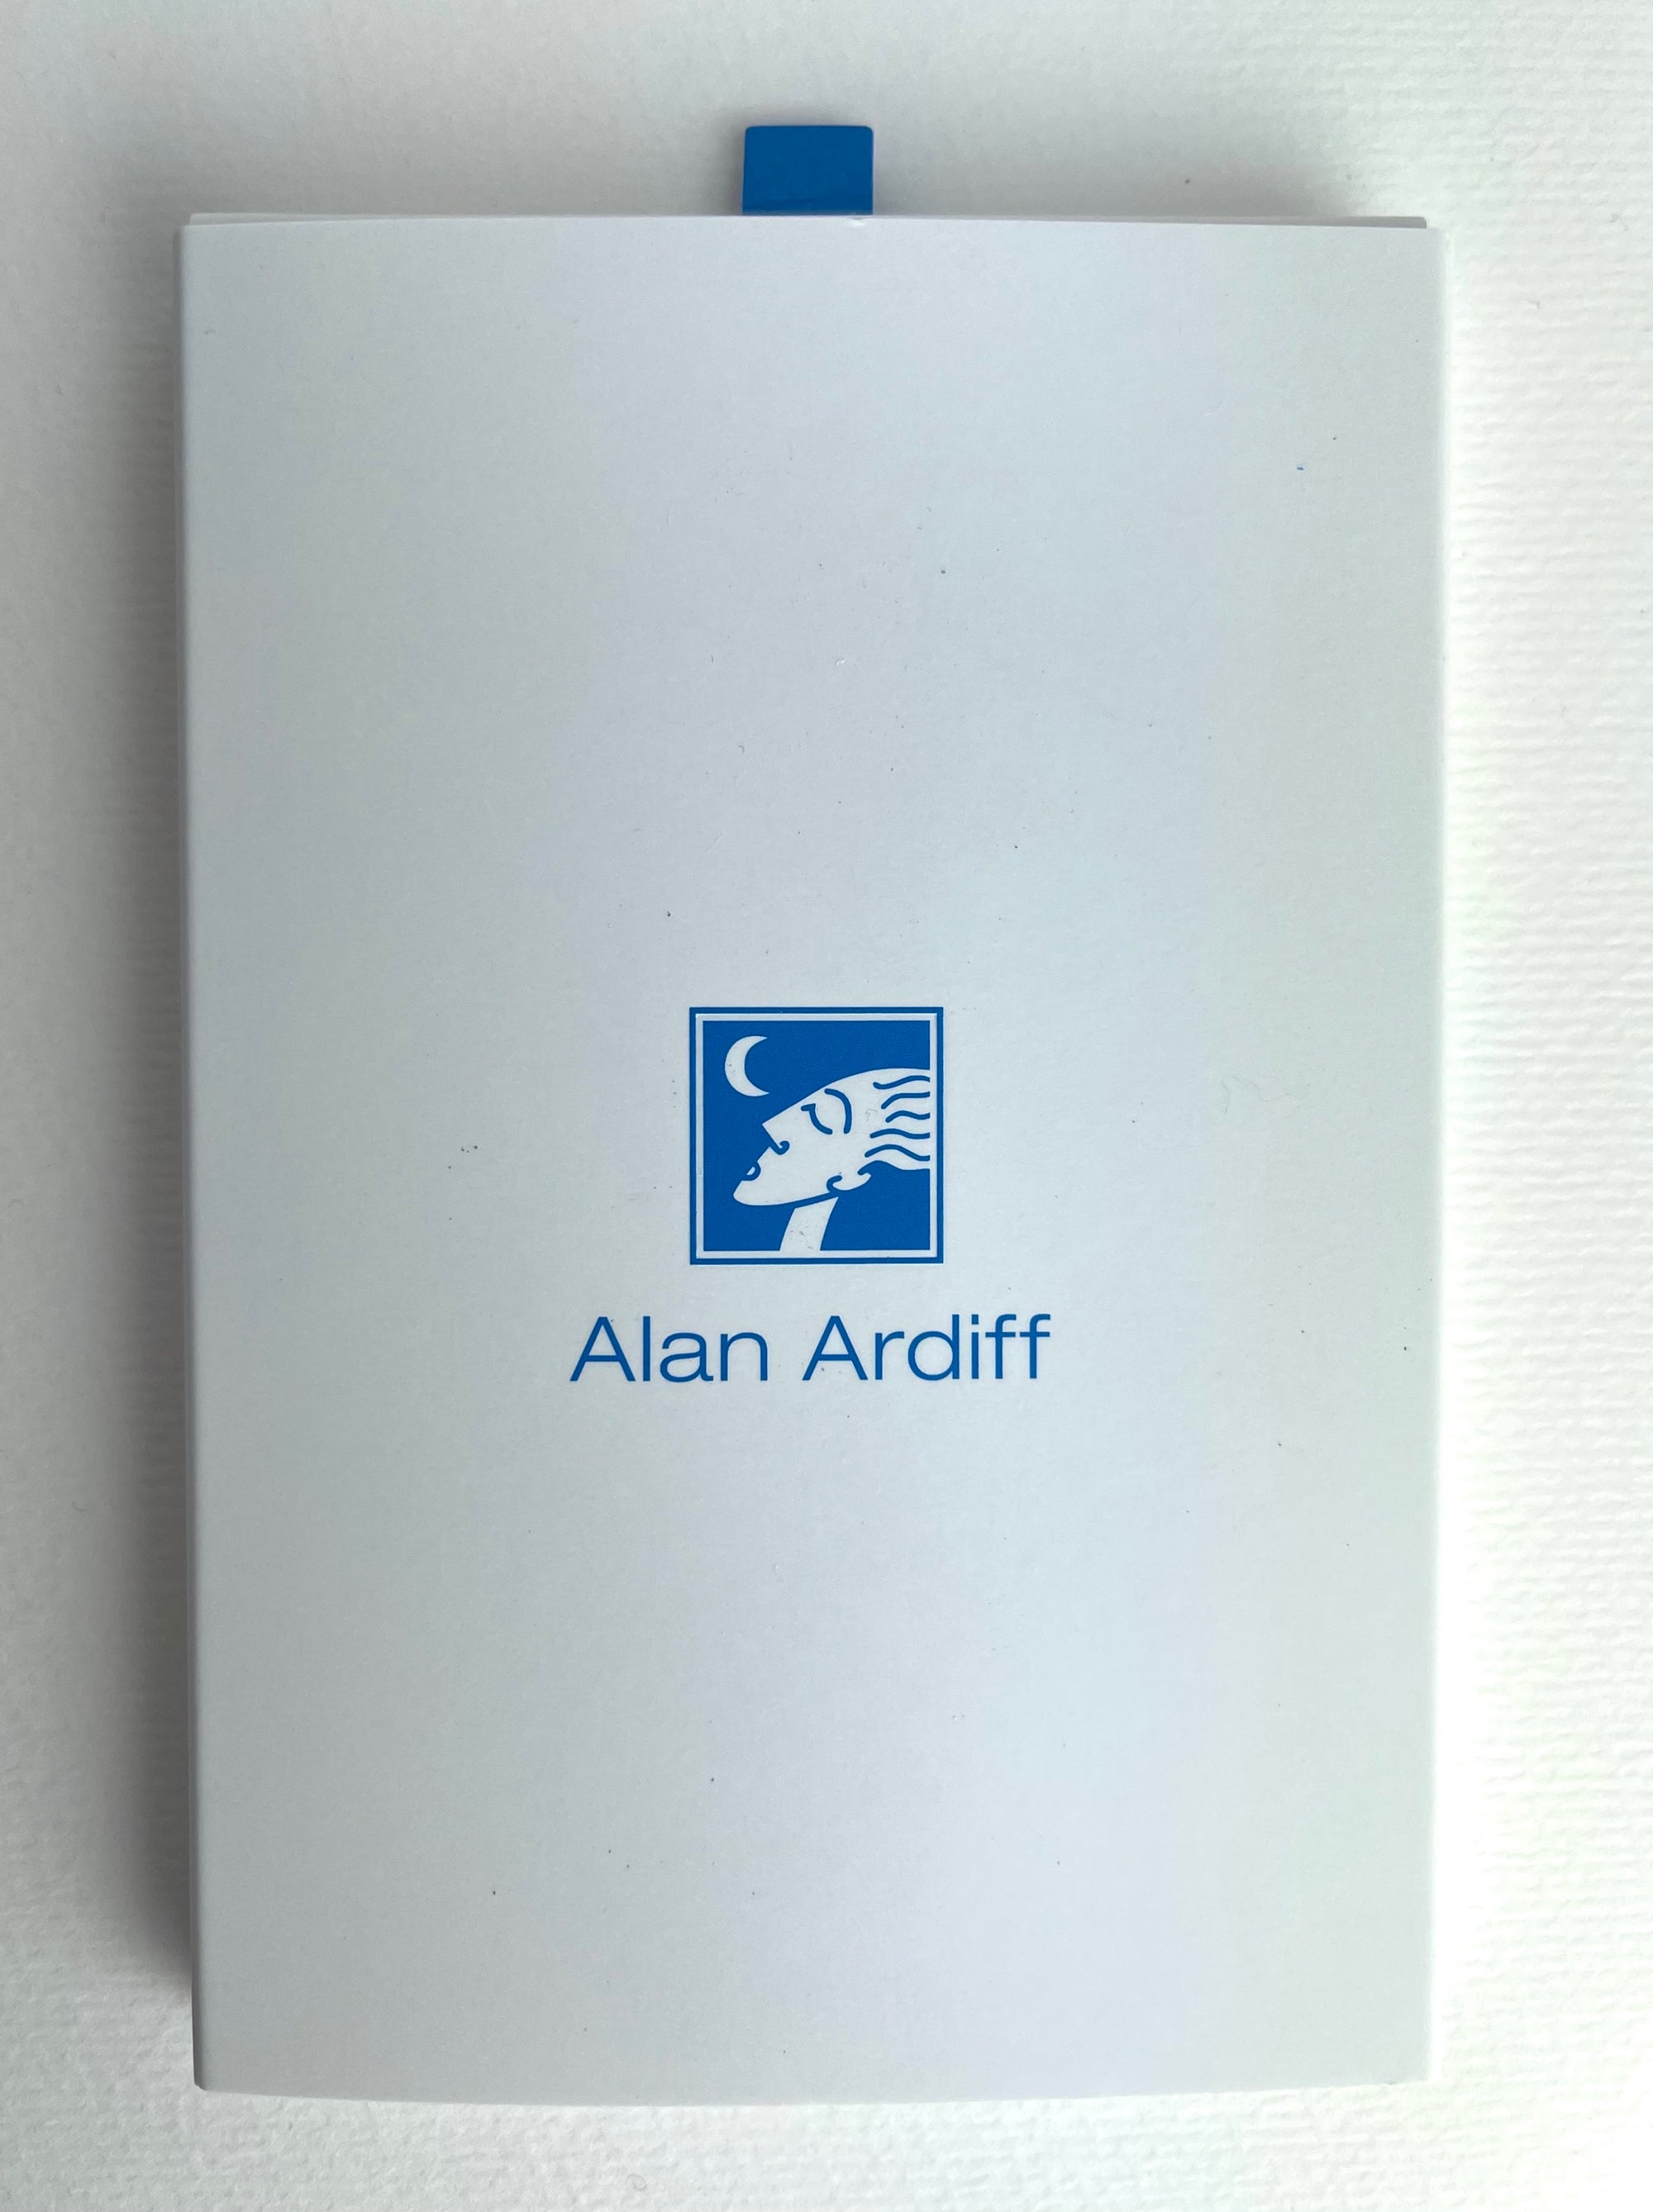 Free as a Bird pendant, Alan Ardiff